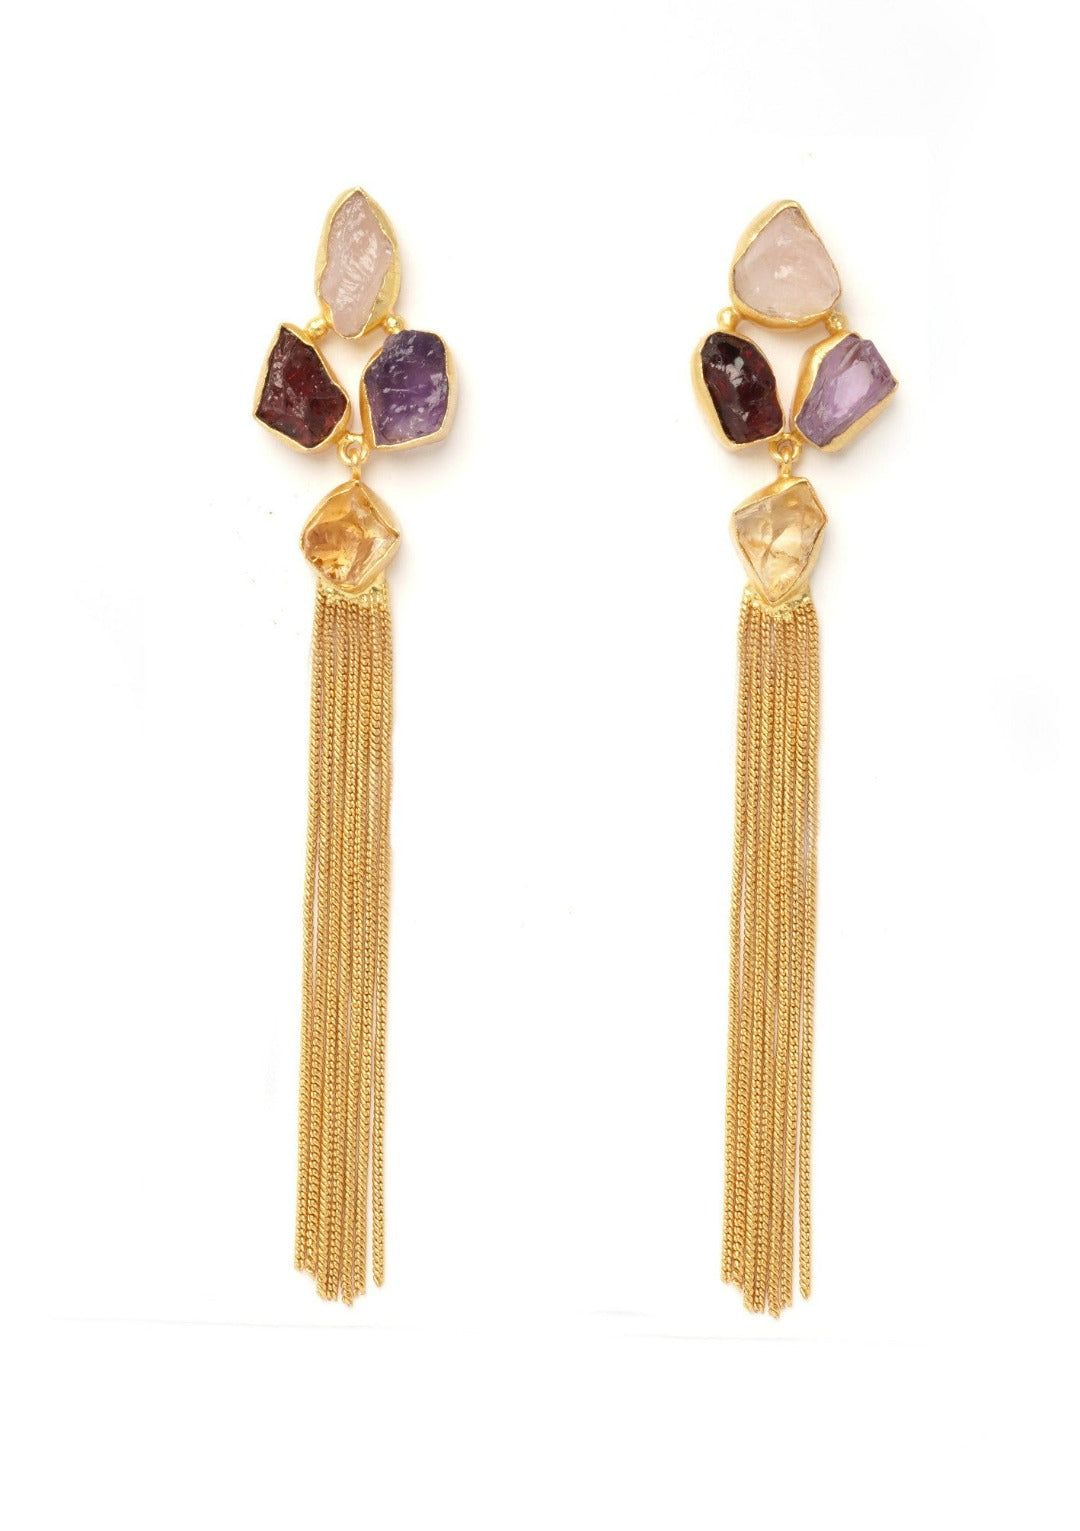 Tassel dangler earrings with four semi precious stones